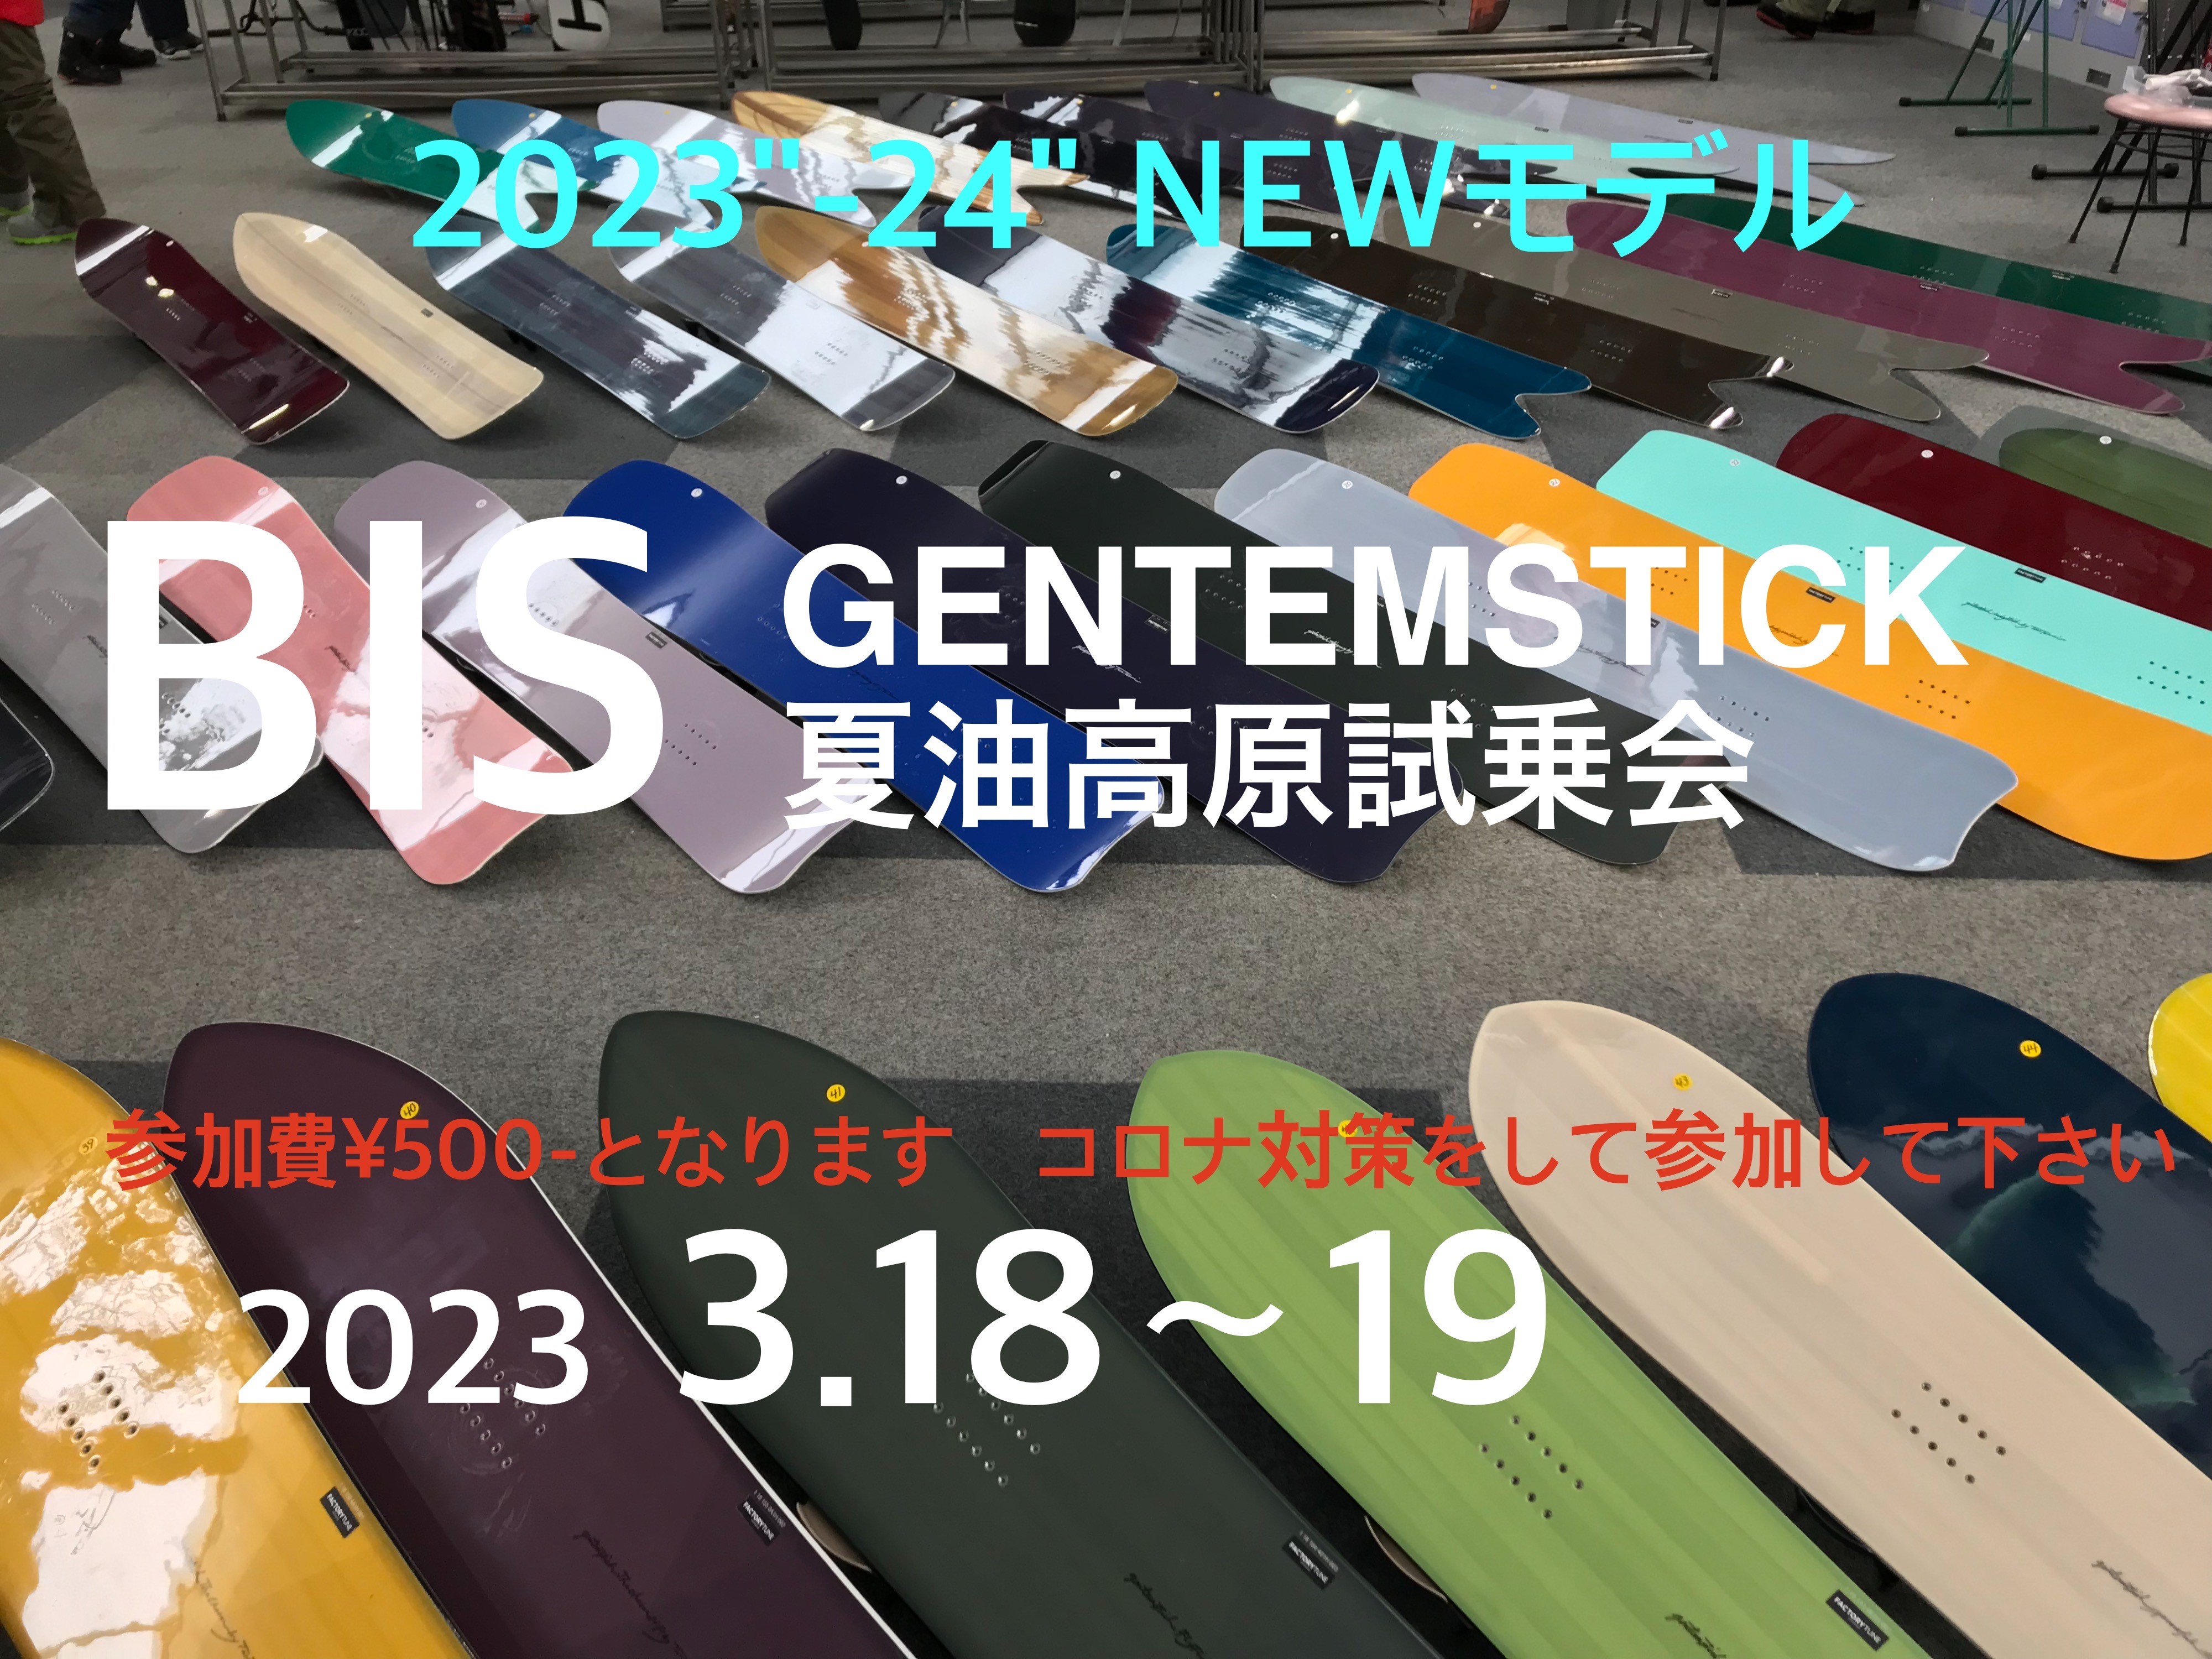 23-24BIS/GENTEMSTICK夏油高原